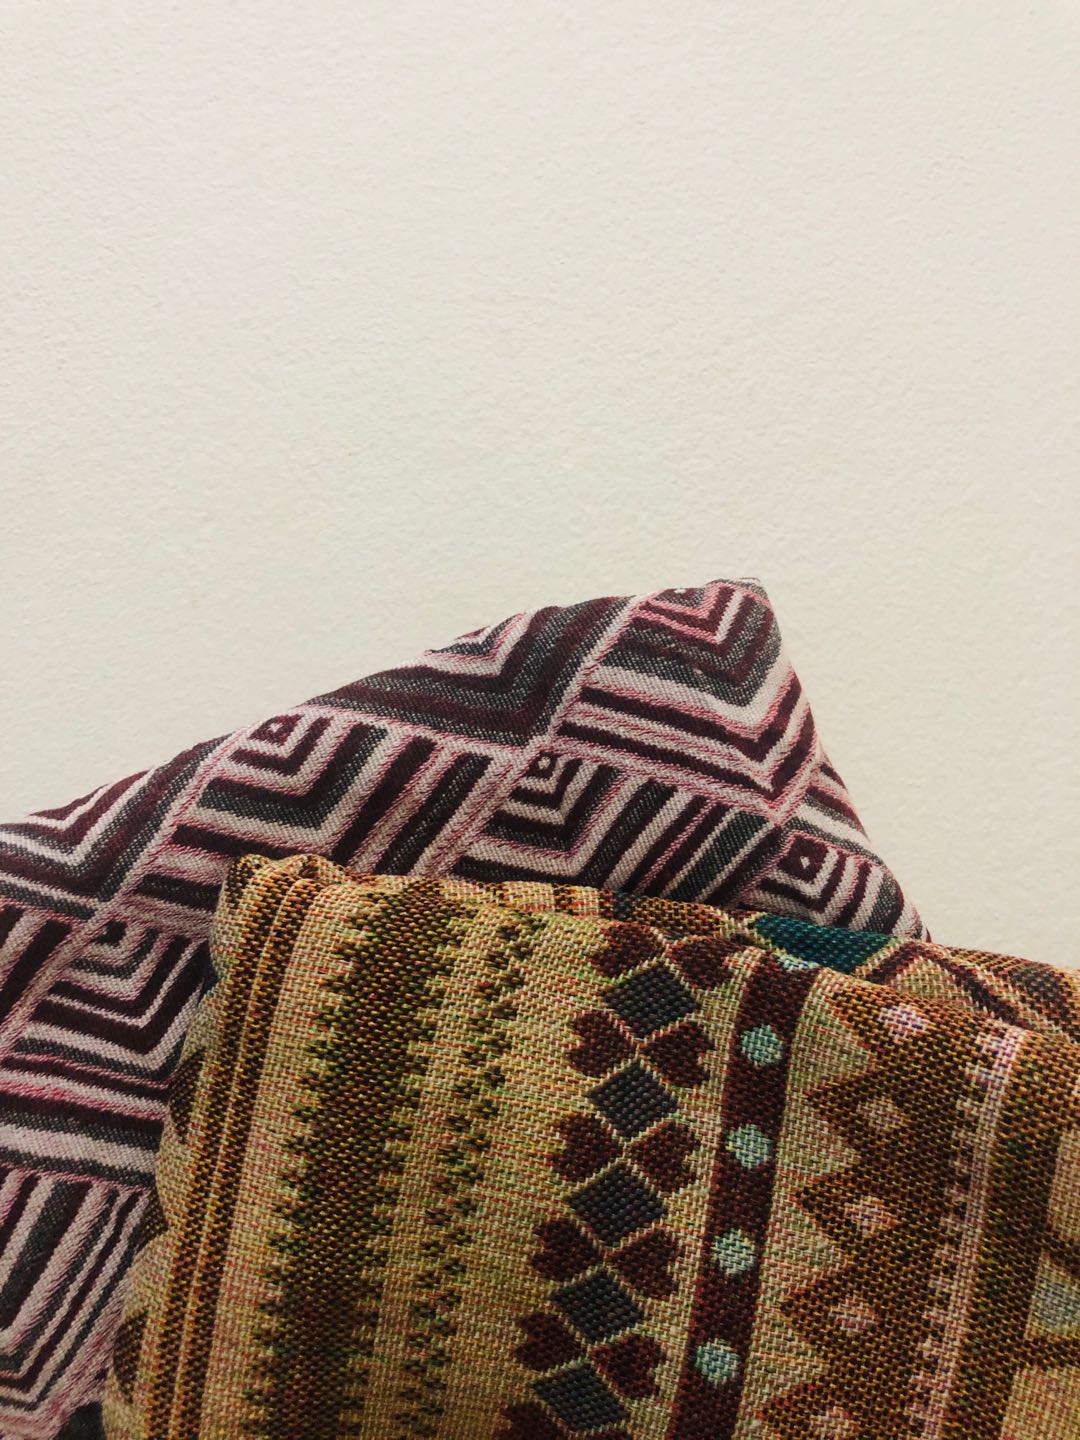 One Meter Native / Folk / Baguio Igorot Cloth for DIY Bag | Shopee ...